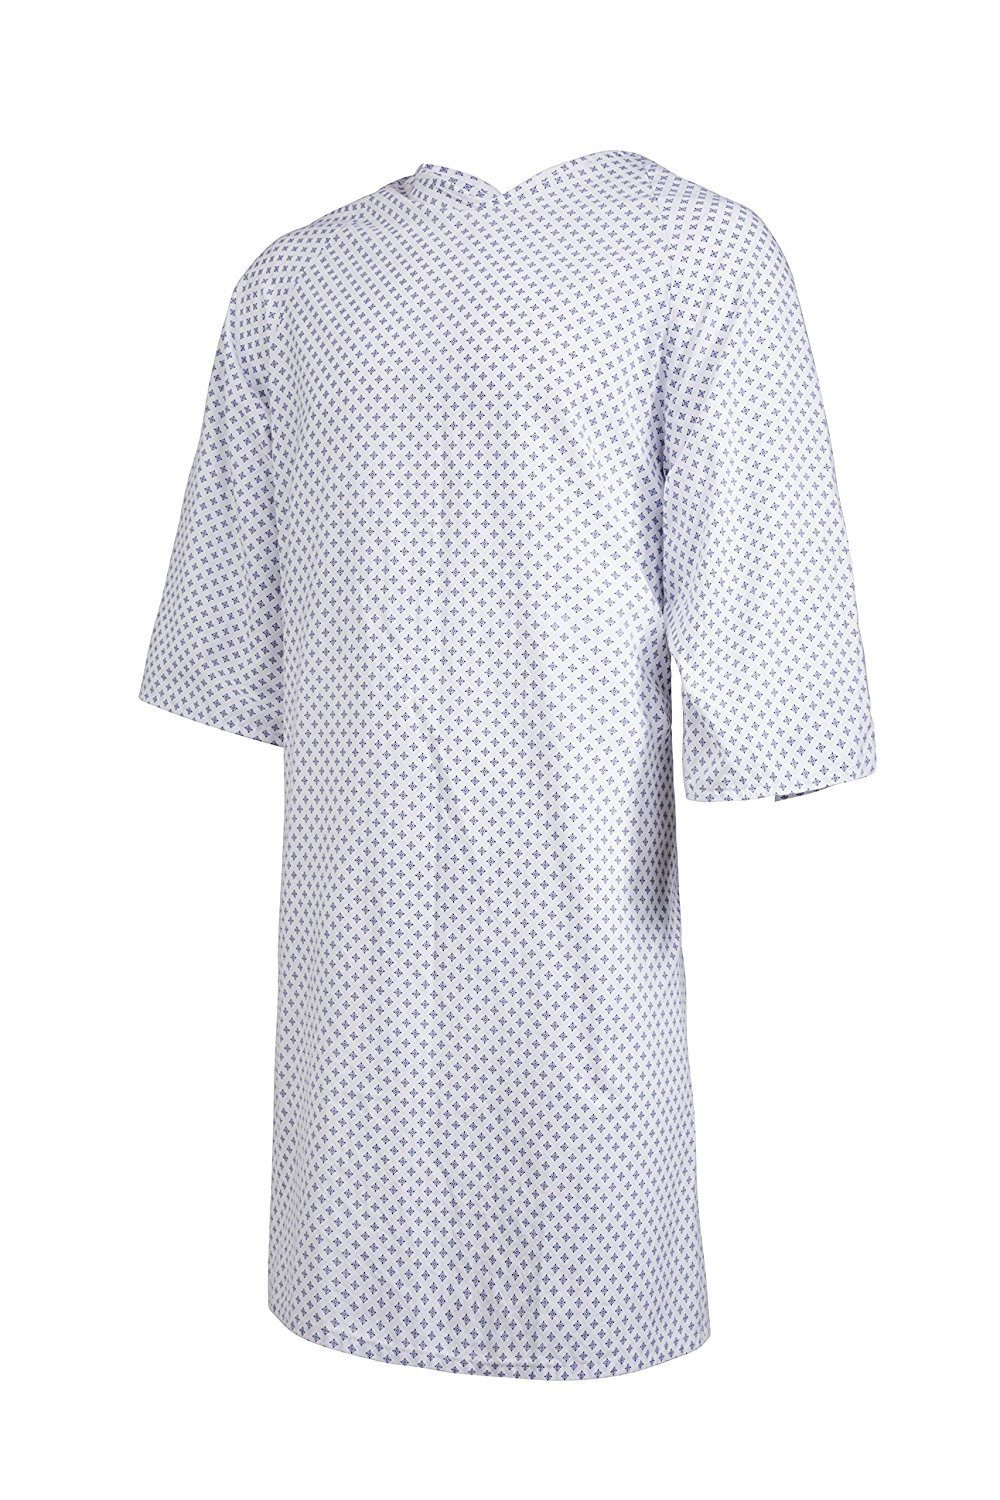 Clinotest Nachthemd »Patientenhemd/Nachthemd/Krankenhaushemd/Pflegehemd,«  online kaufen | OTTO